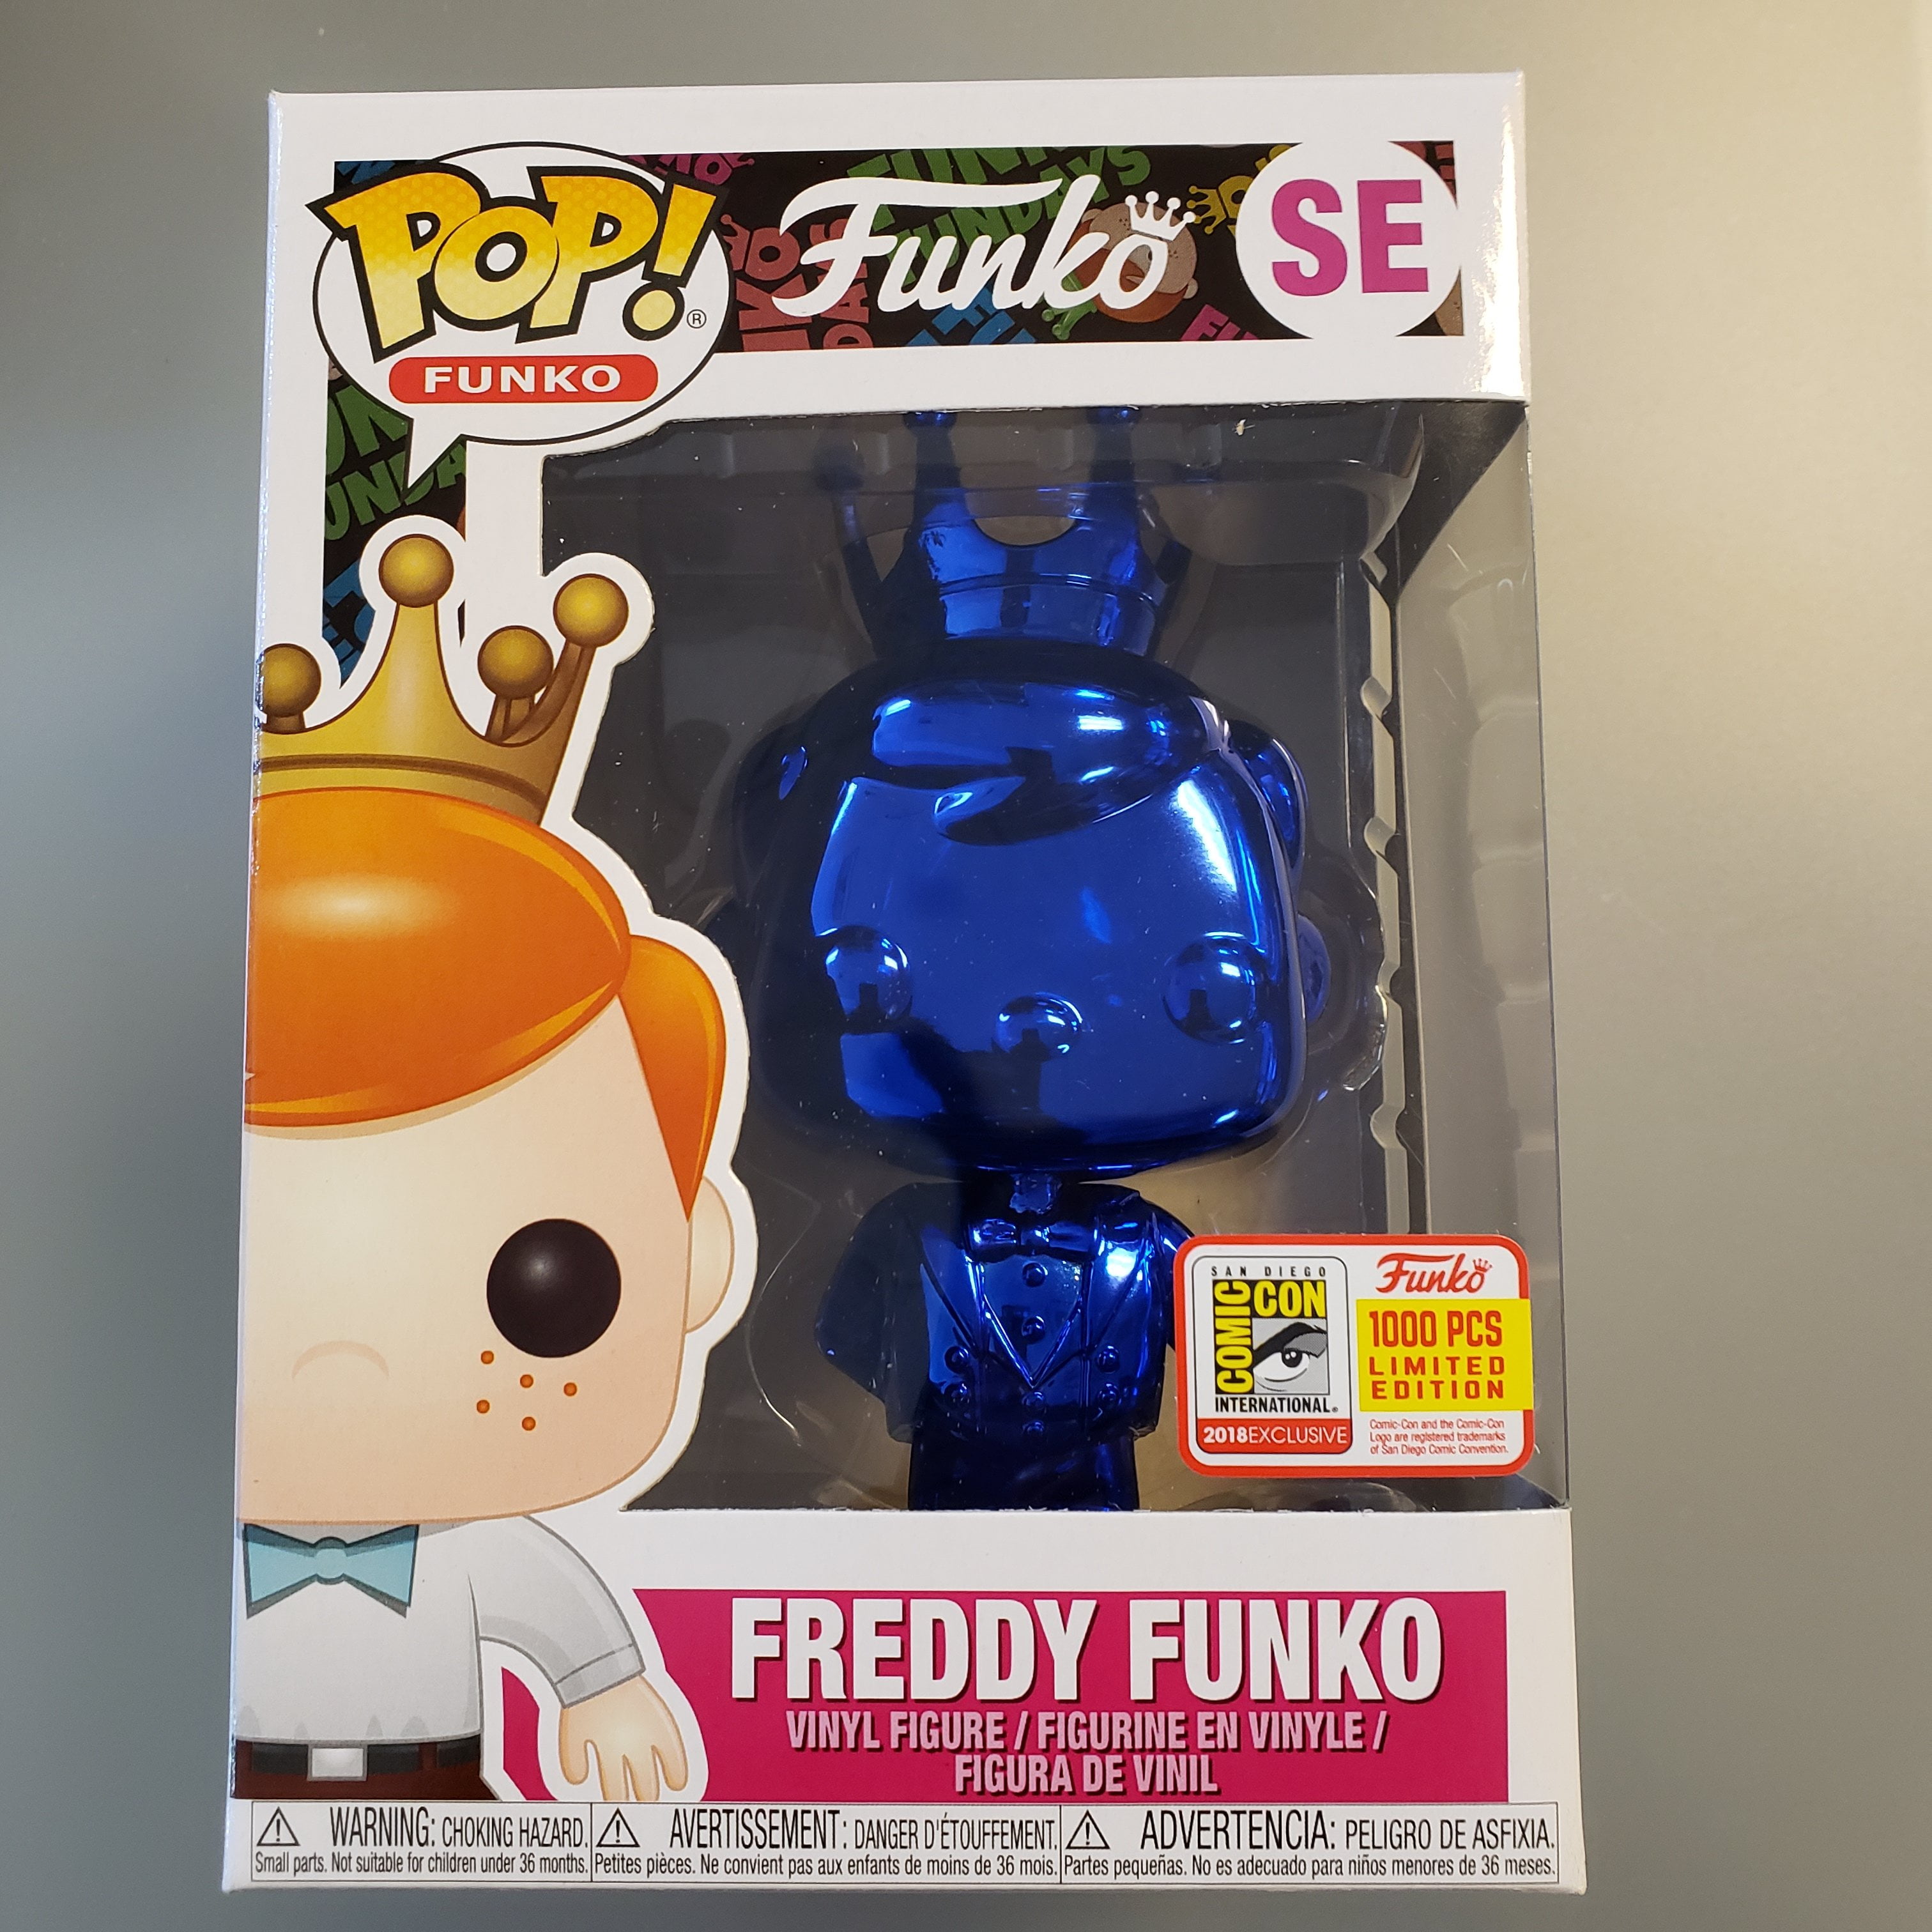 Funko Pop Vinyl Figure Freddy Funko Pennywise SDCC LE4000 Brand Box SE Hot